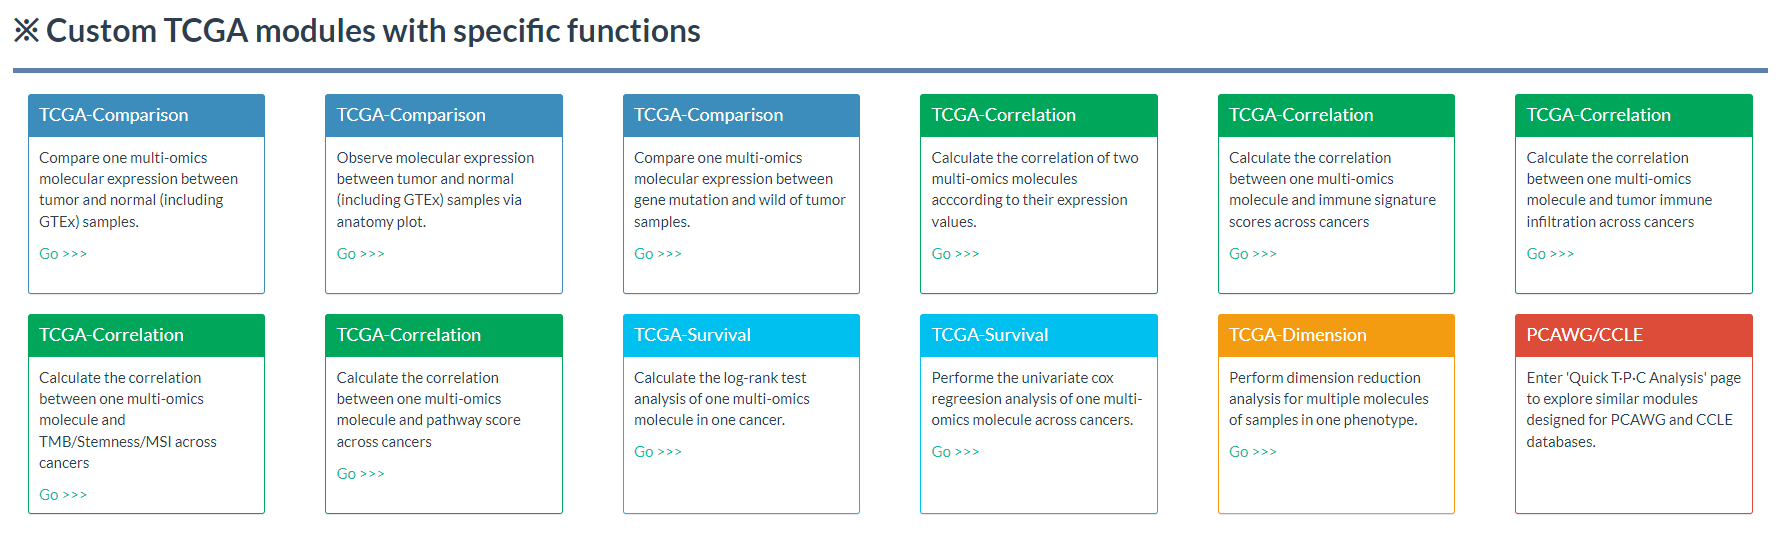 12 TCGA analytical modules